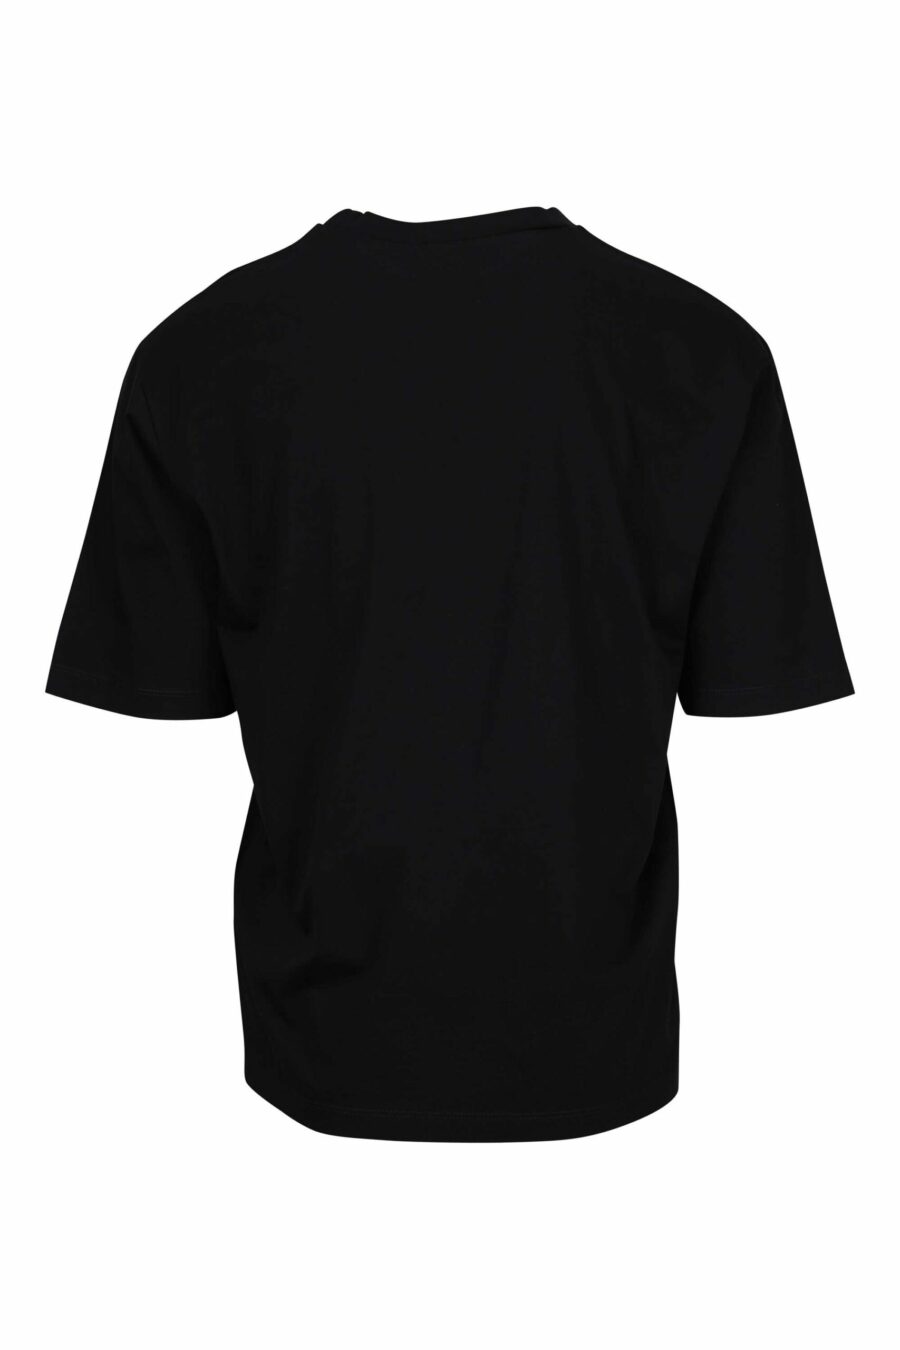 Camiseta negra "oversize" con maxilogo "icon" verde neon borroso - 8054148359669 1 scaled